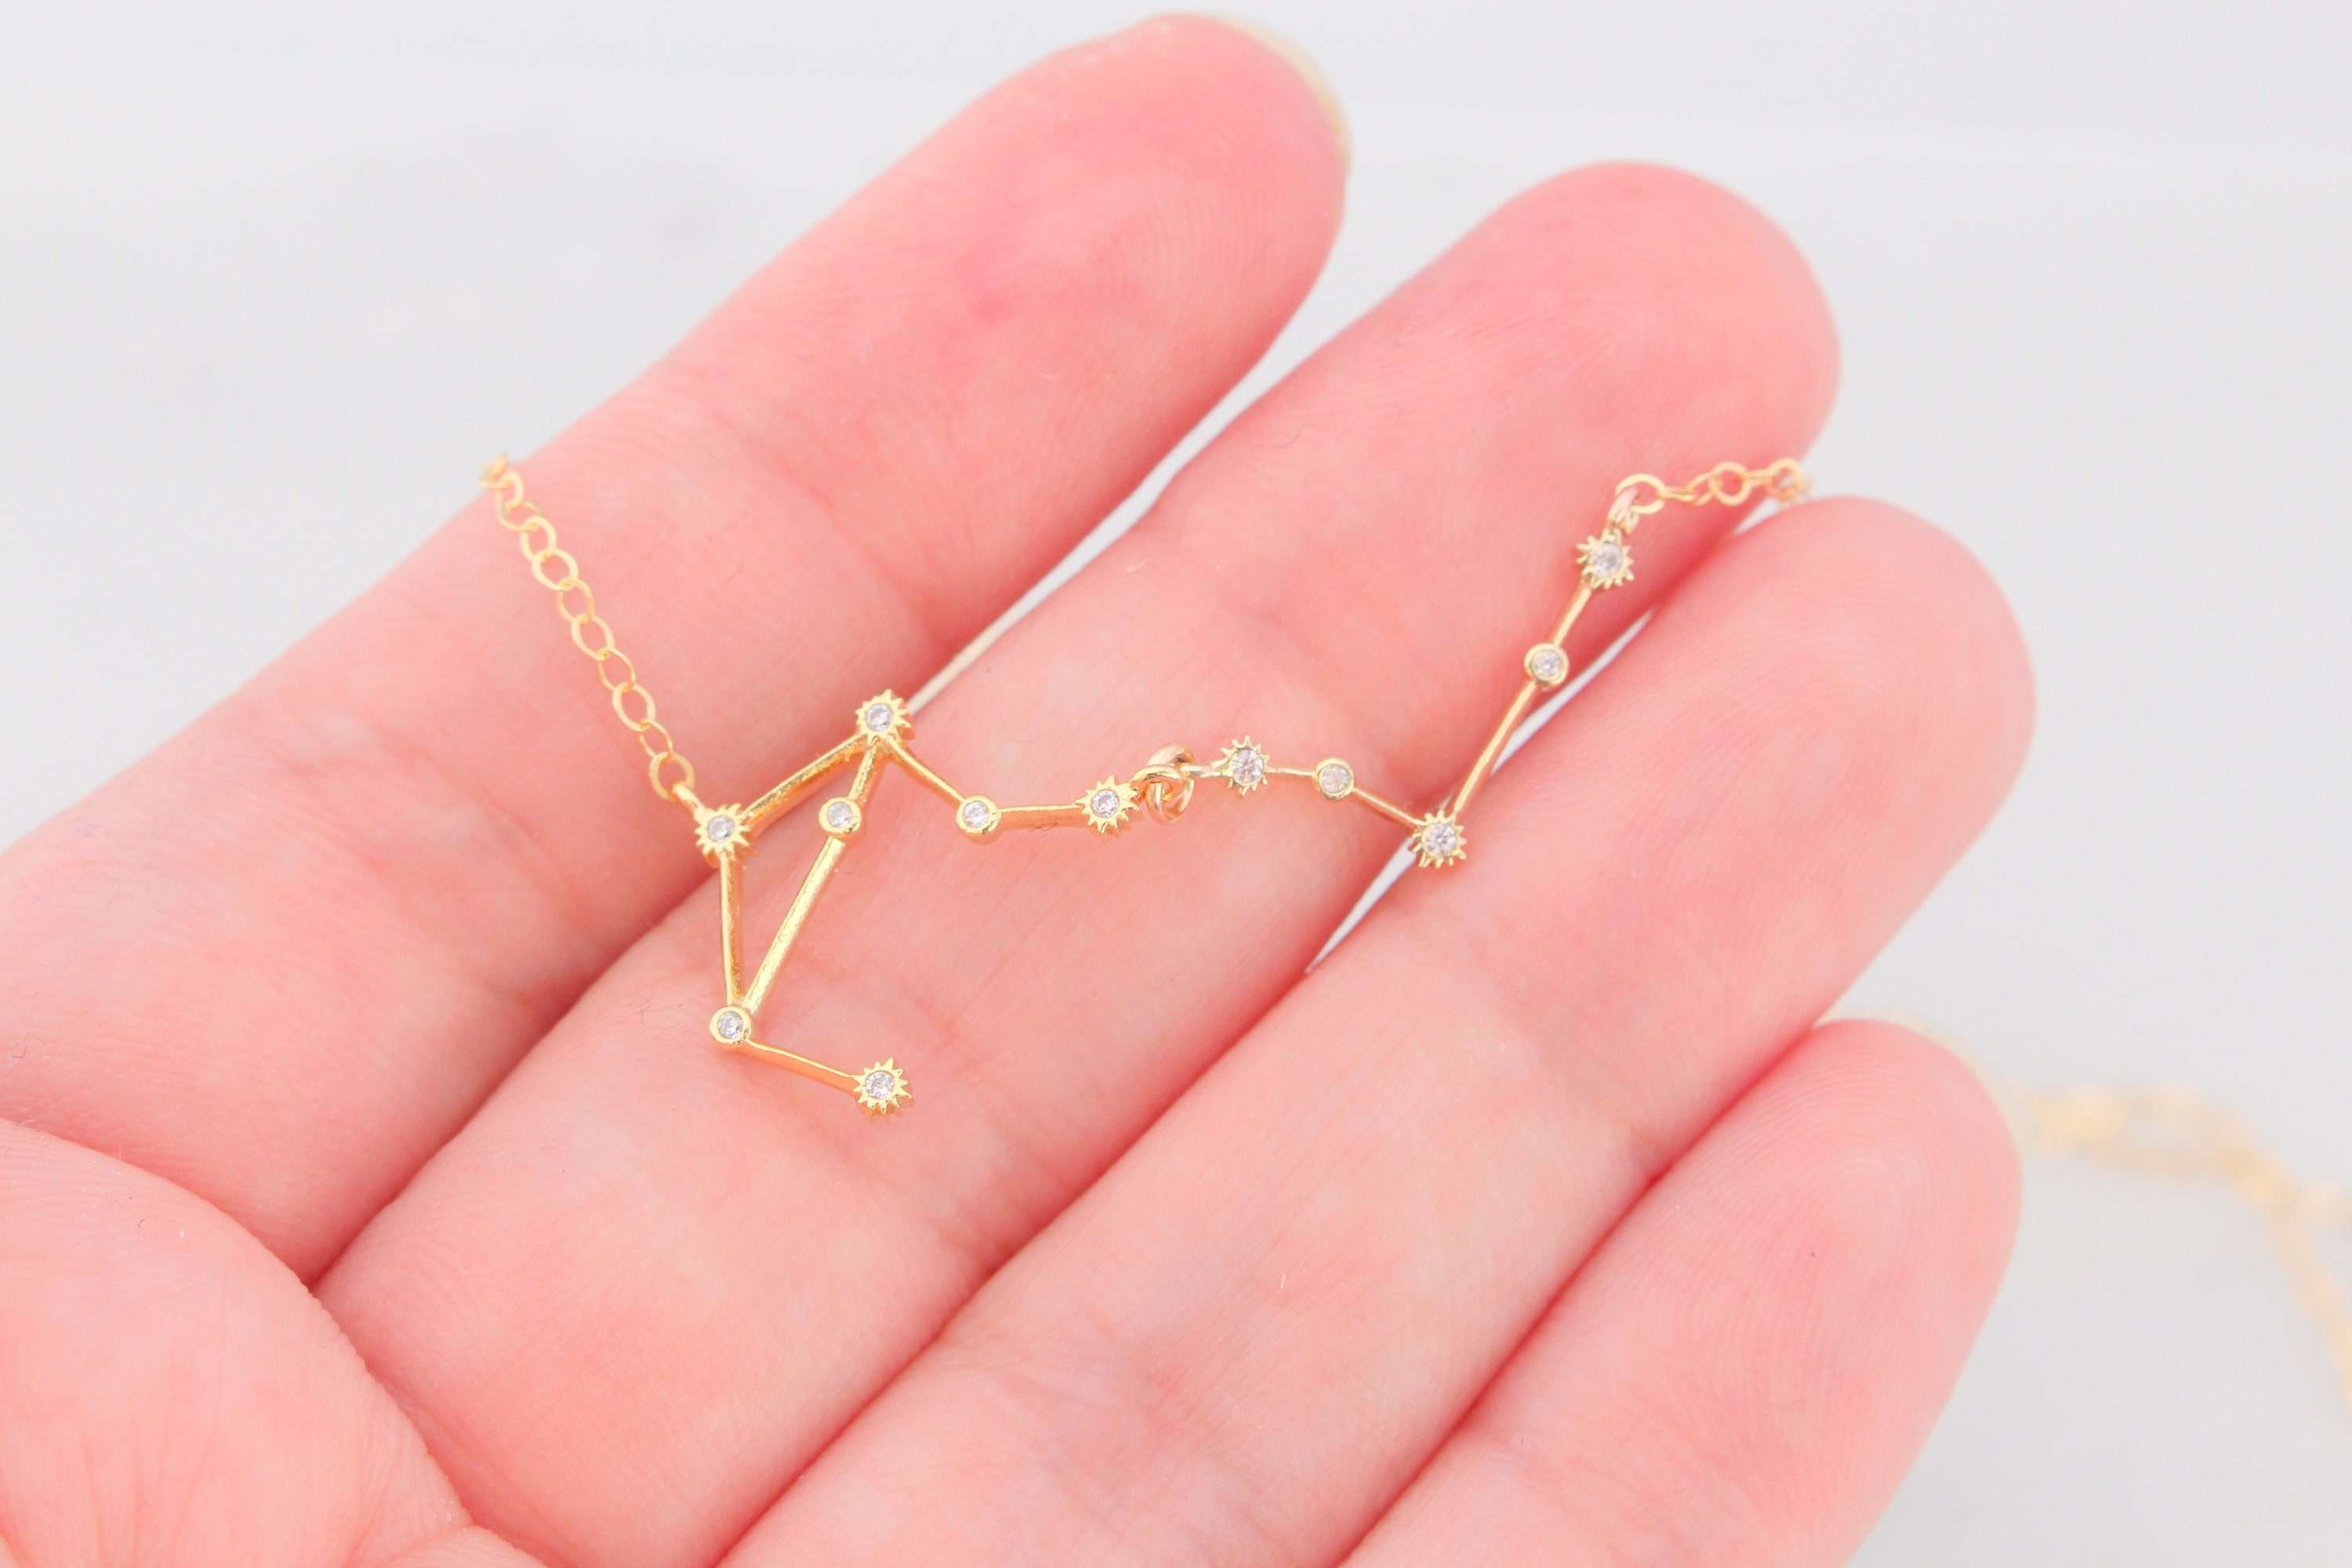 Box Set 2019 New Zodiac Swan Necklace Pendant Women Girls Clavicle Choker Chain 12 Constellation Star With Korean Version